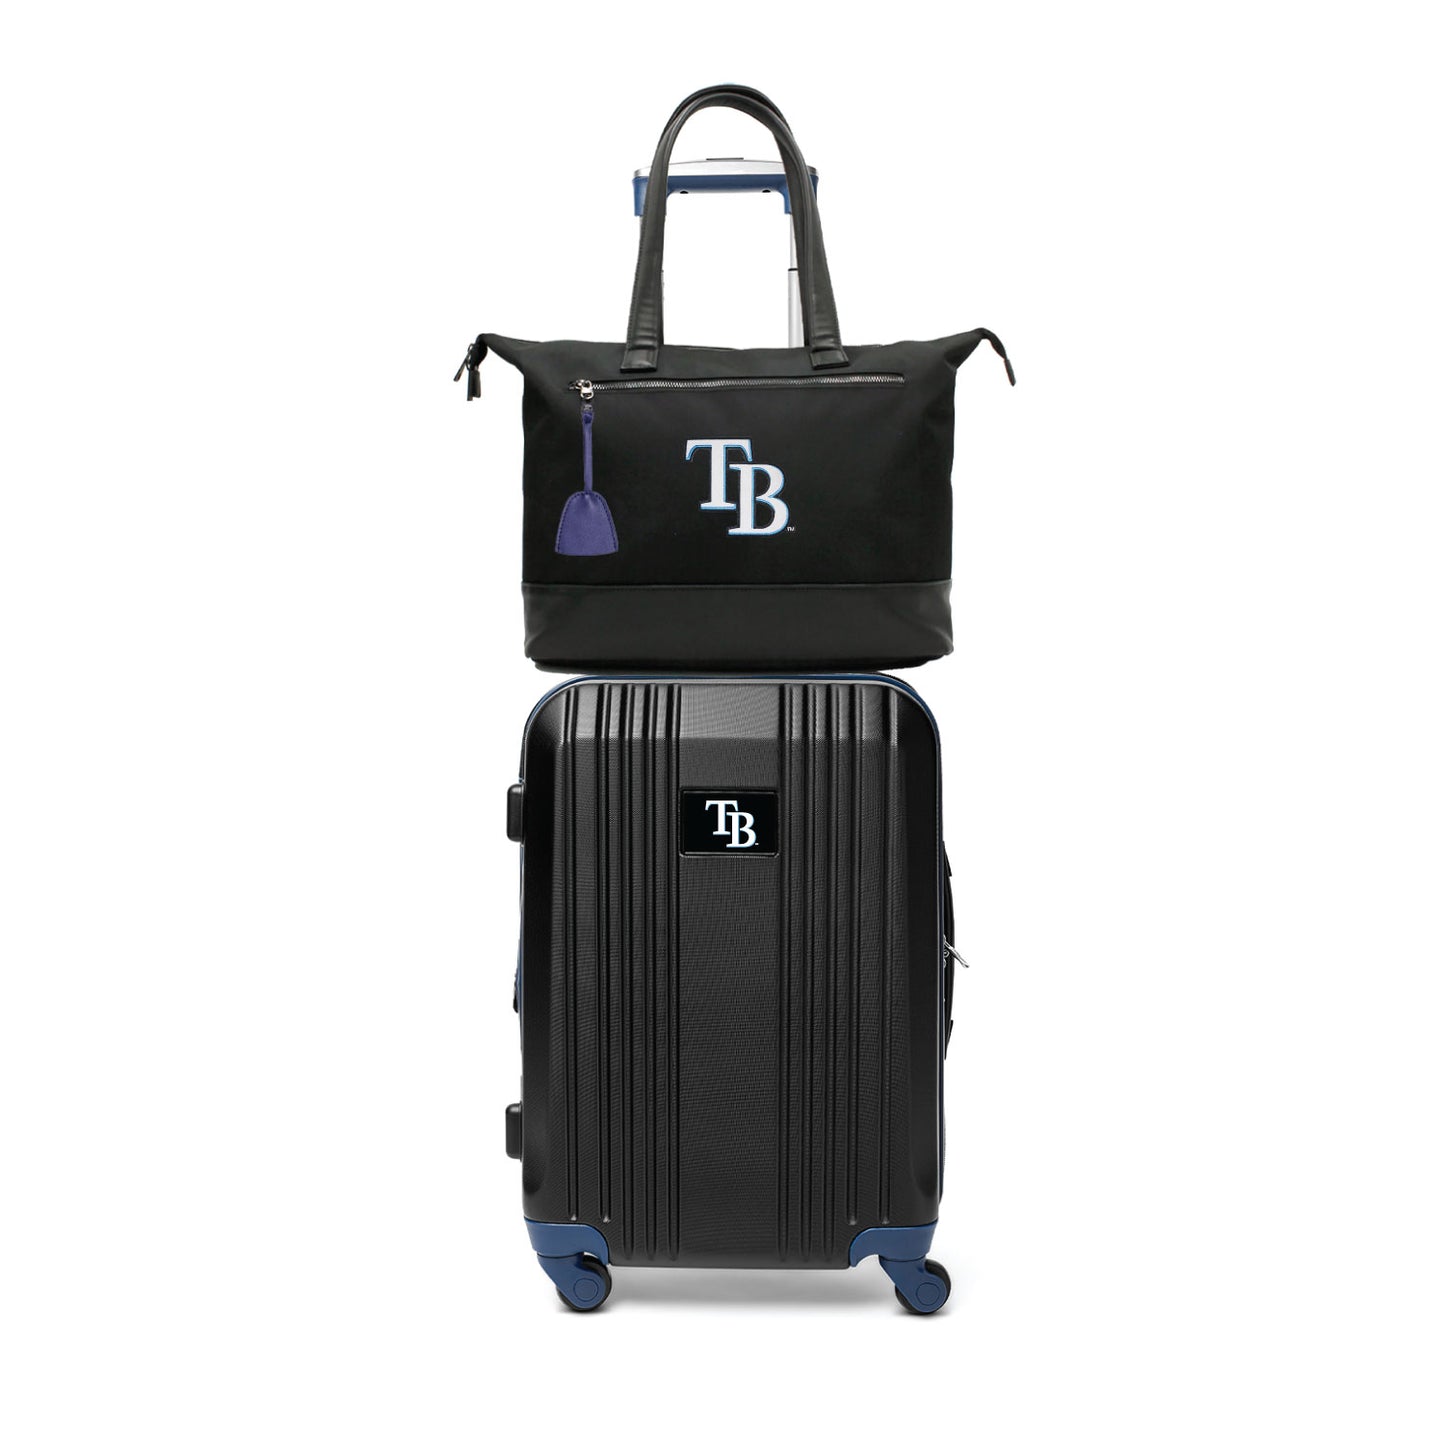 Tampa Bay Rays Premium Laptop Tote Bag and Luggage Set